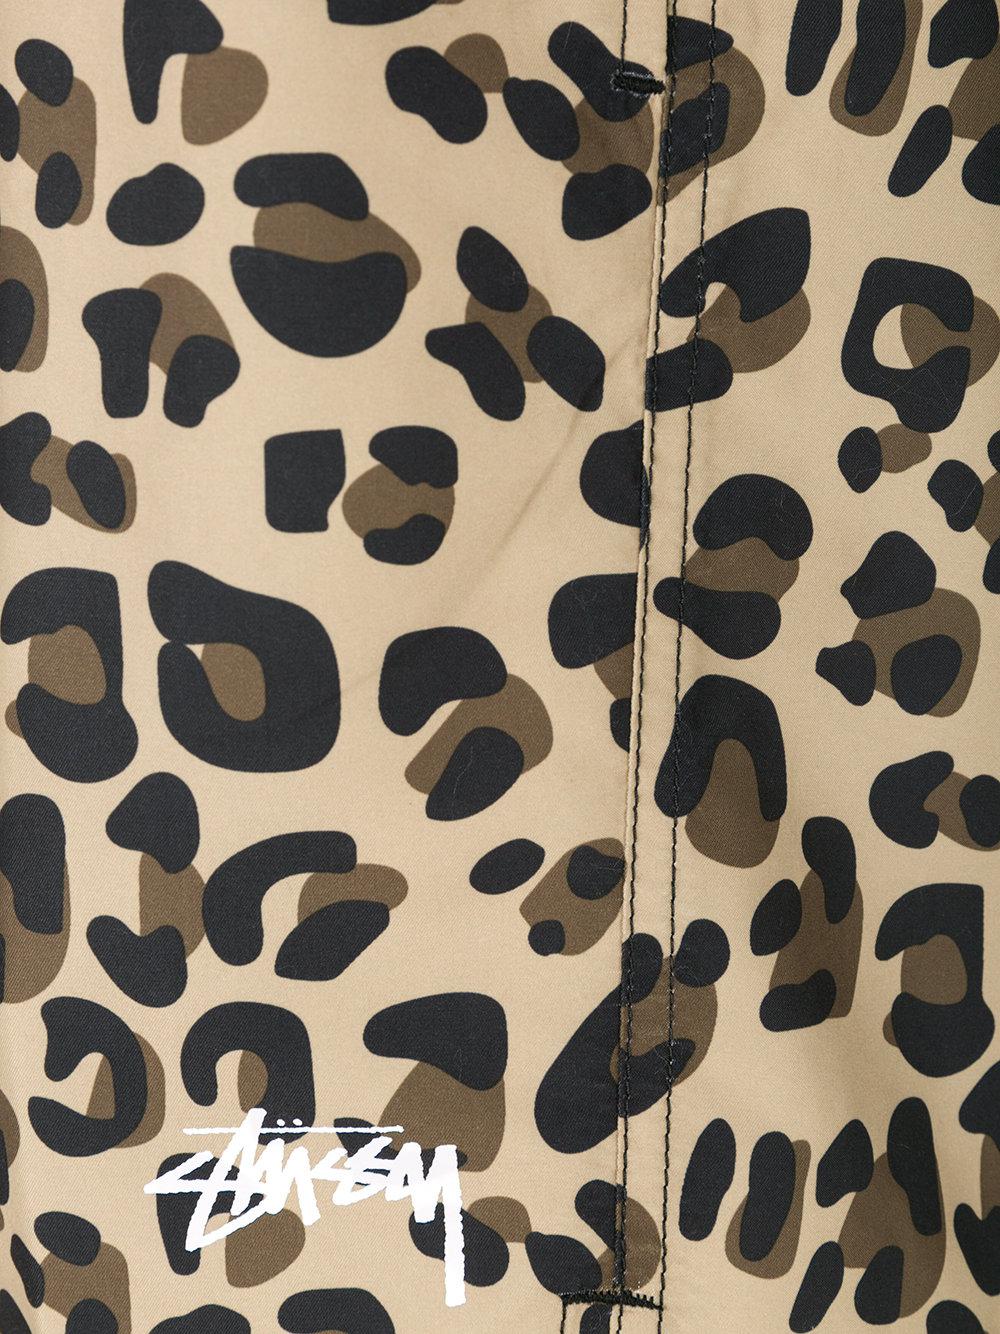 Stussy Leopard Print Swim Shorts for Men | Lyst